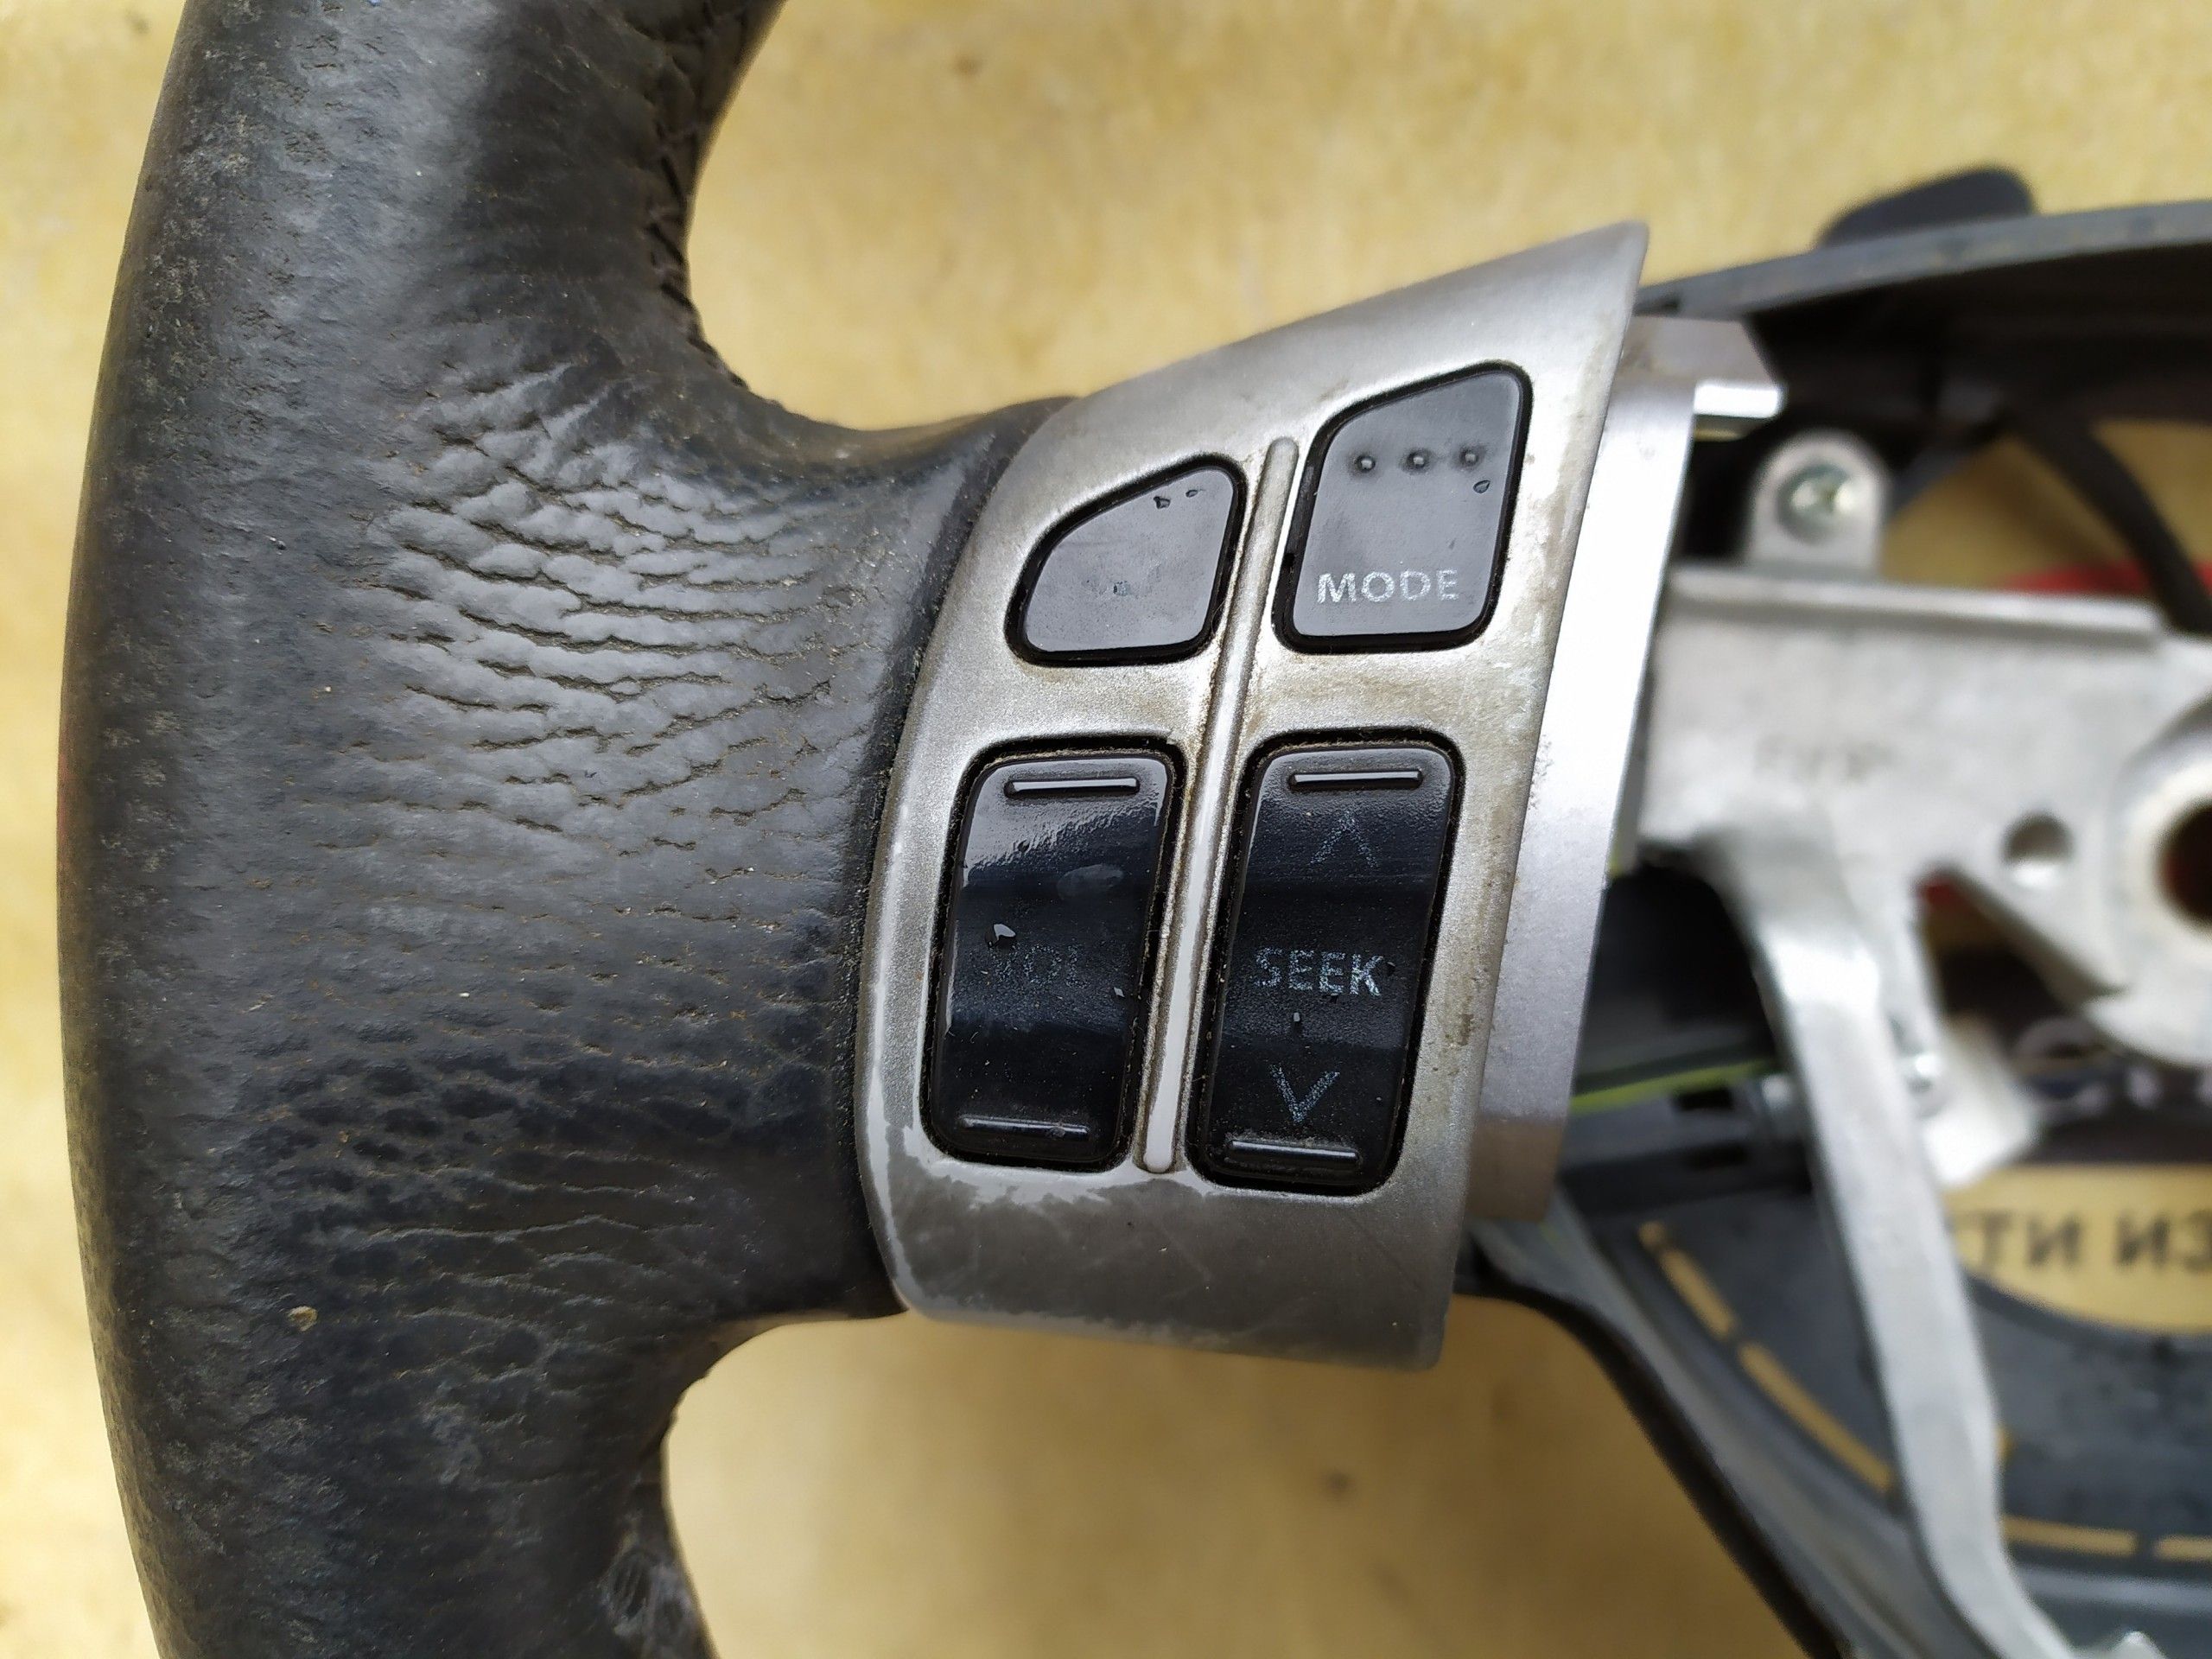 Suzuki SX4 Sedici 2006-2014 руль мультируль кнопки в руль GS131-05610